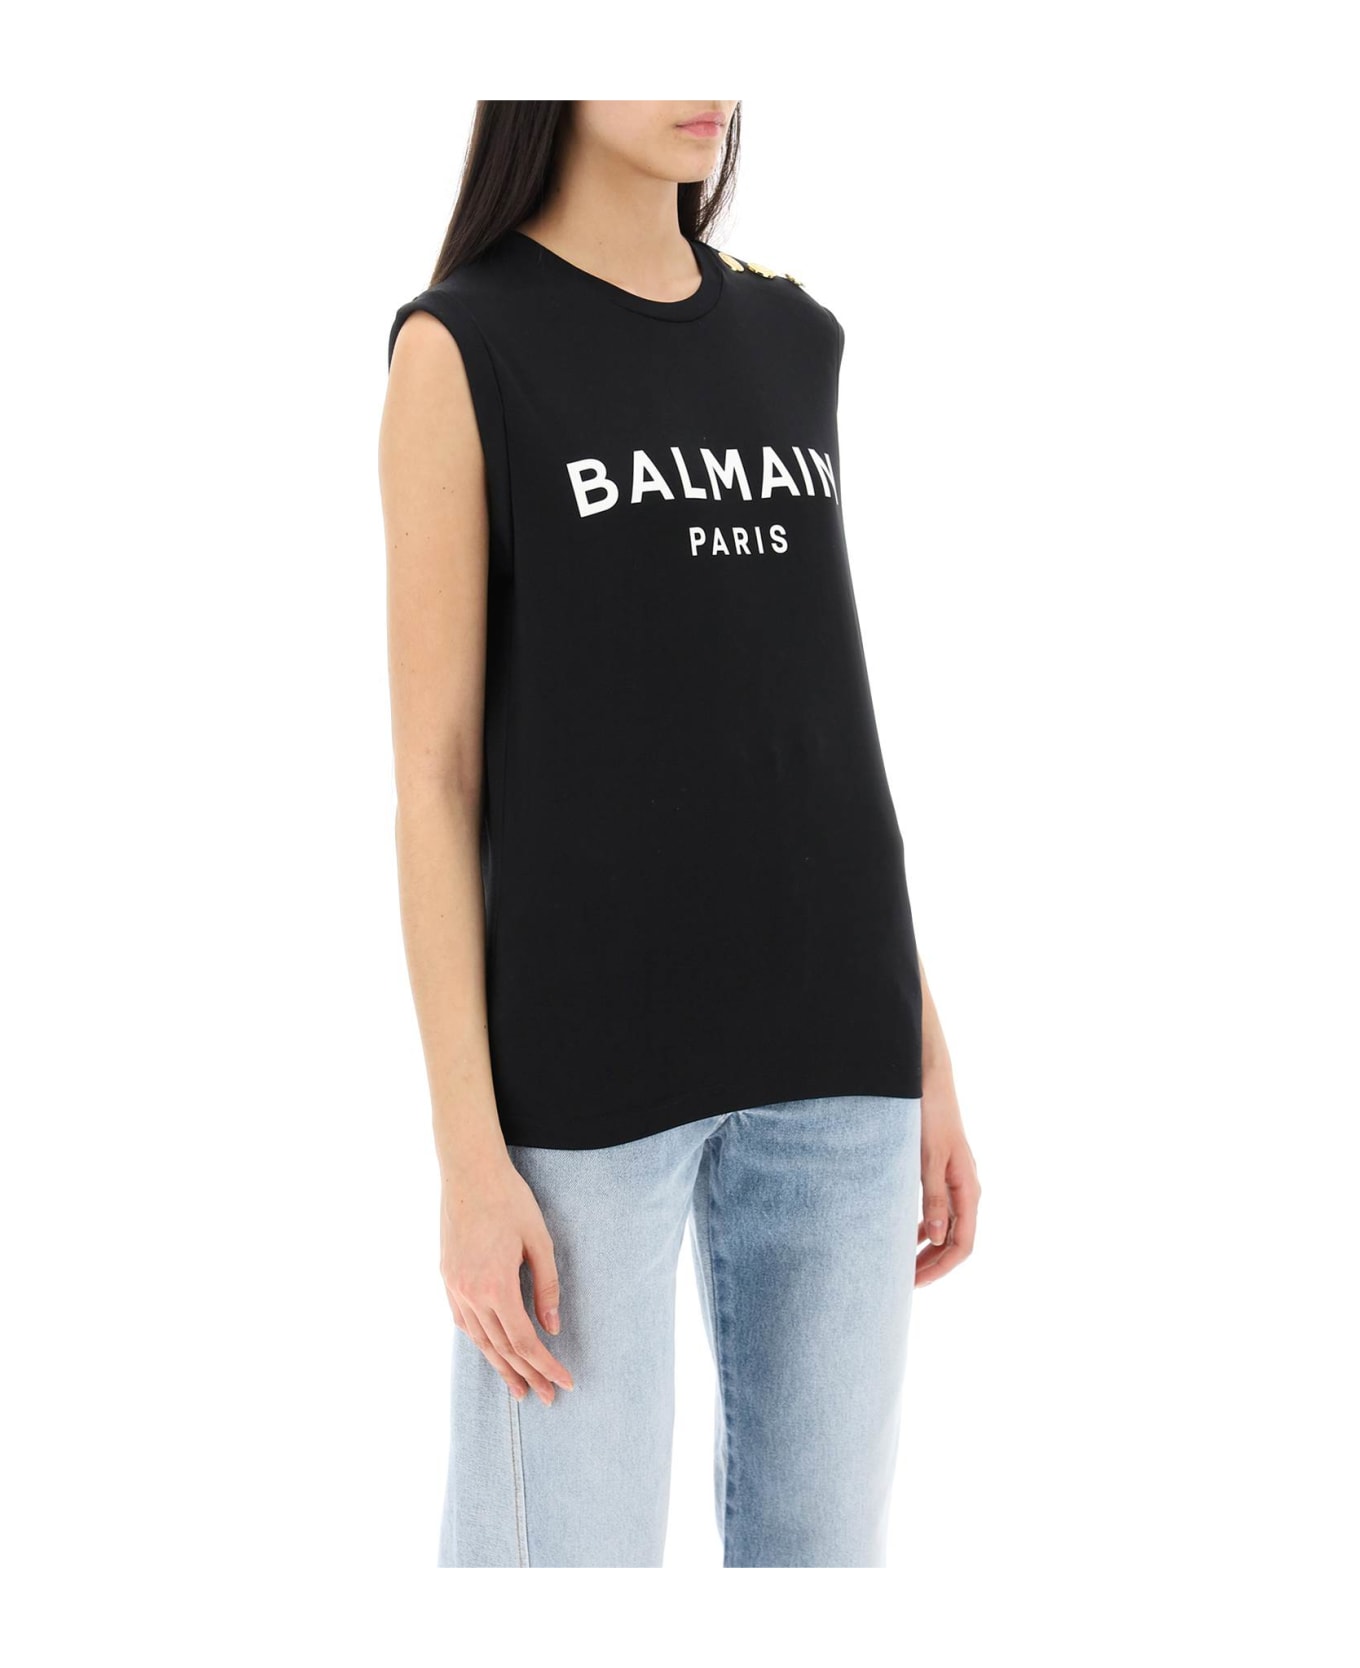 Balmain Logo Tank Top - Black  